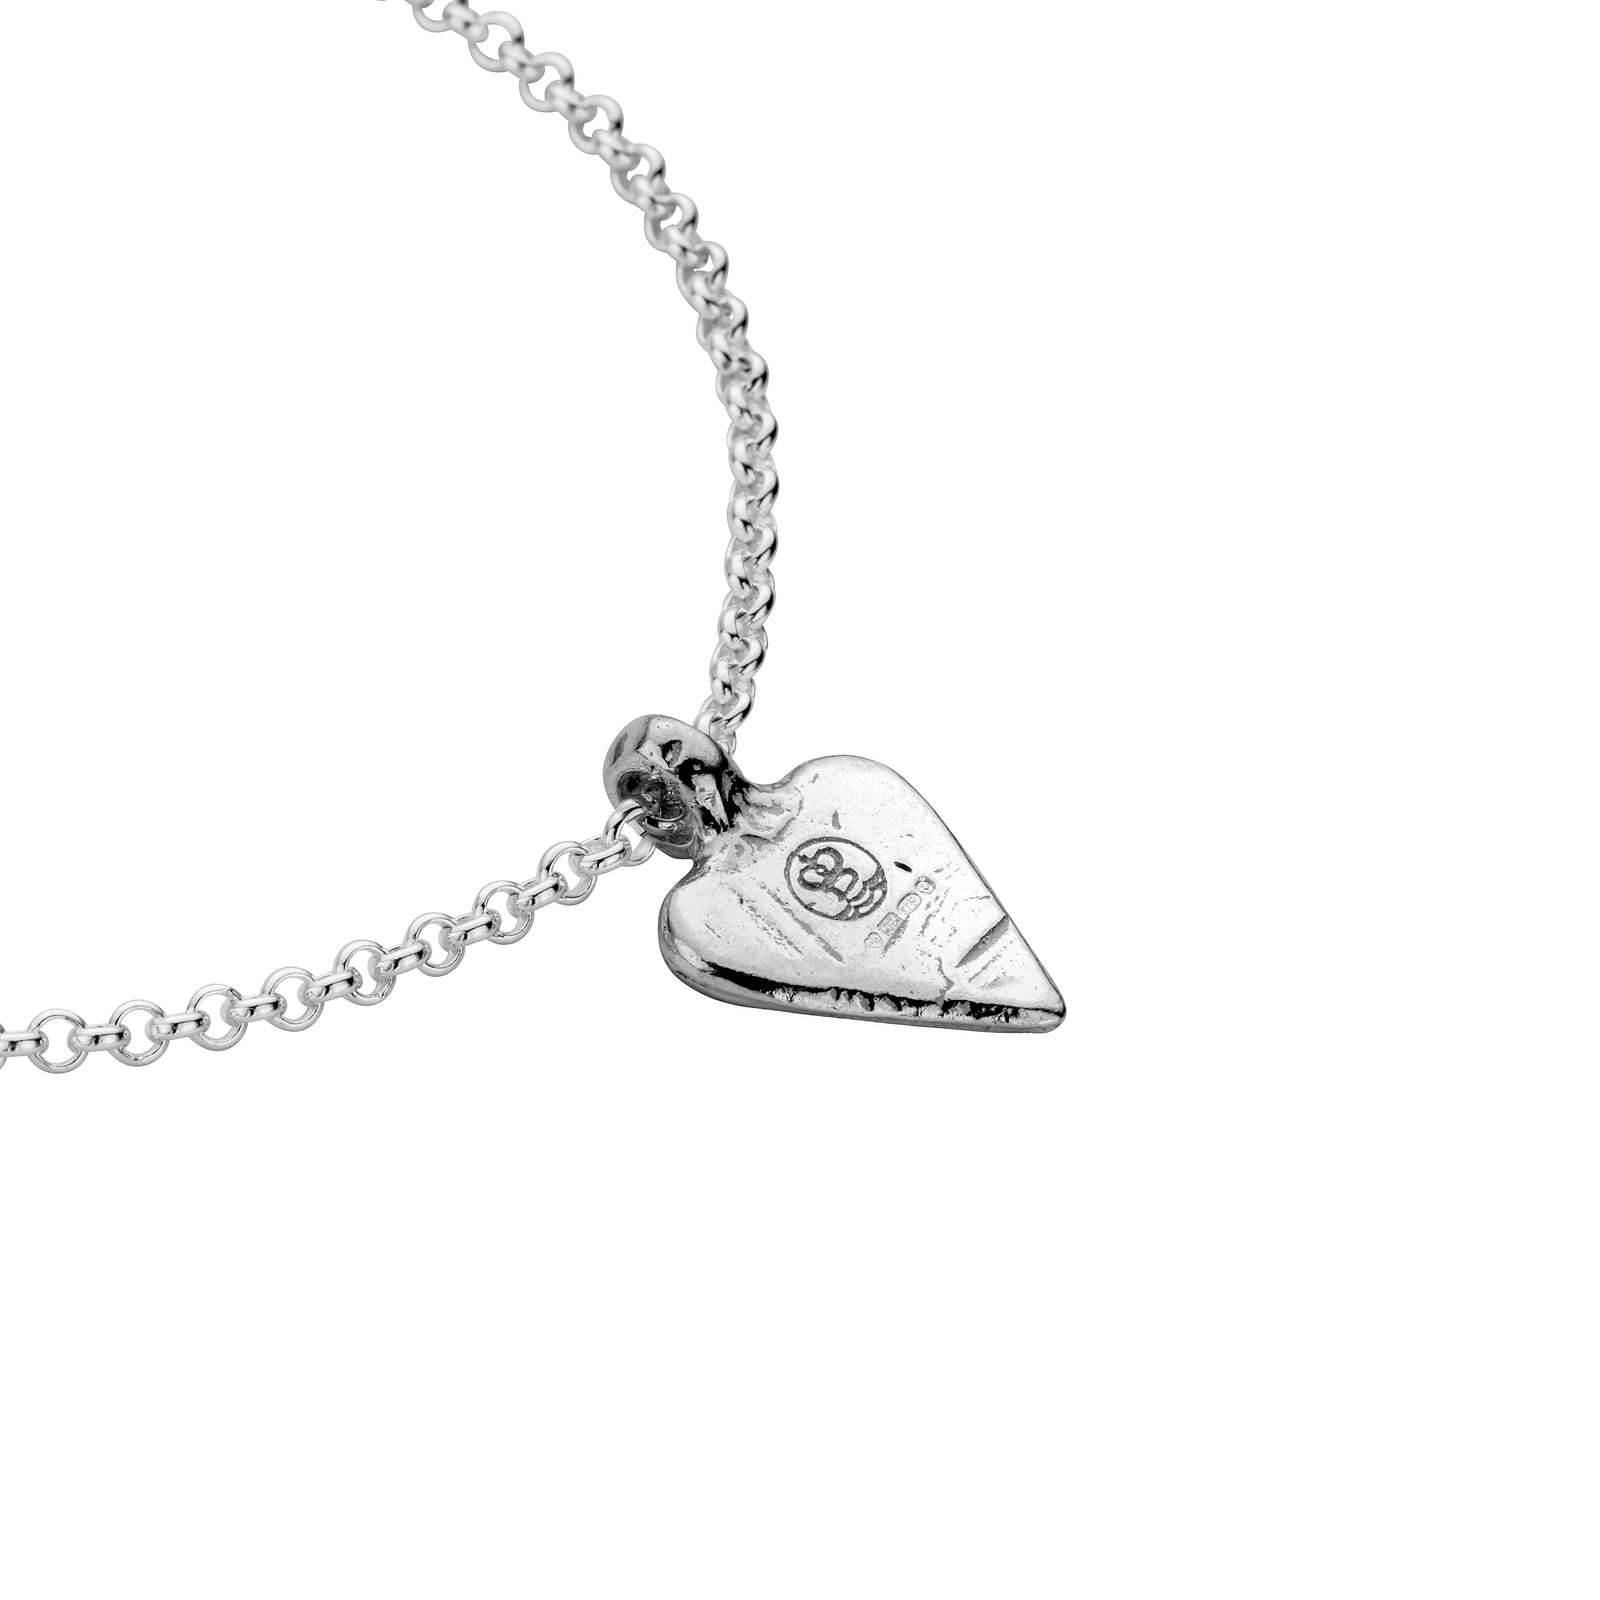 Silver Mini Heart Chain Bracelet with Paw Print